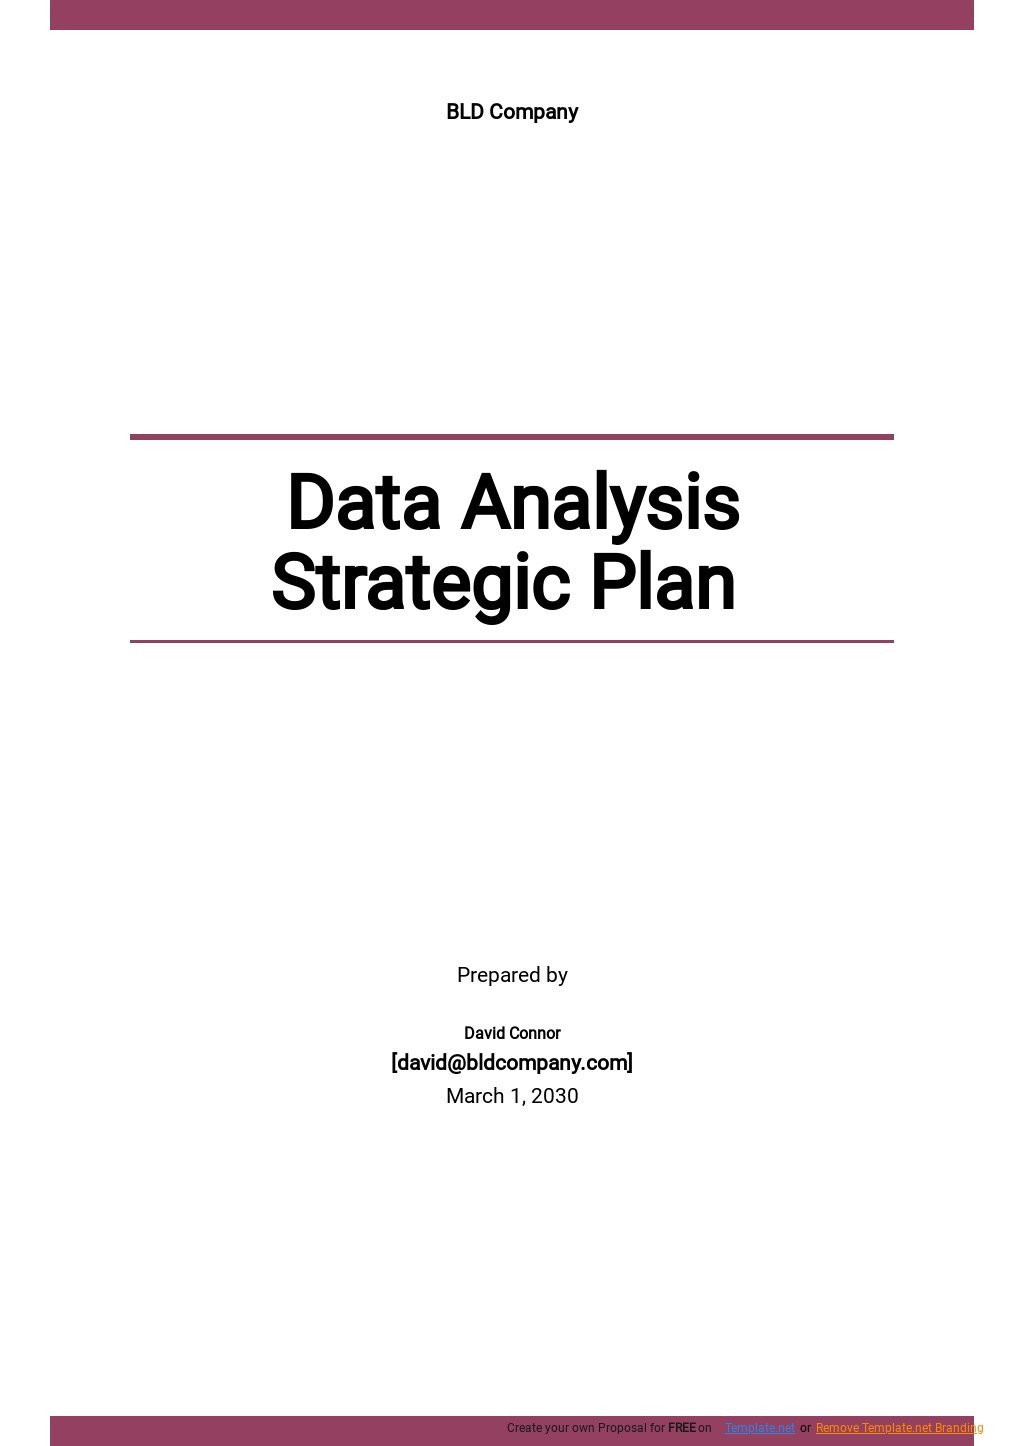 Data Analysis Strategic Plan Template